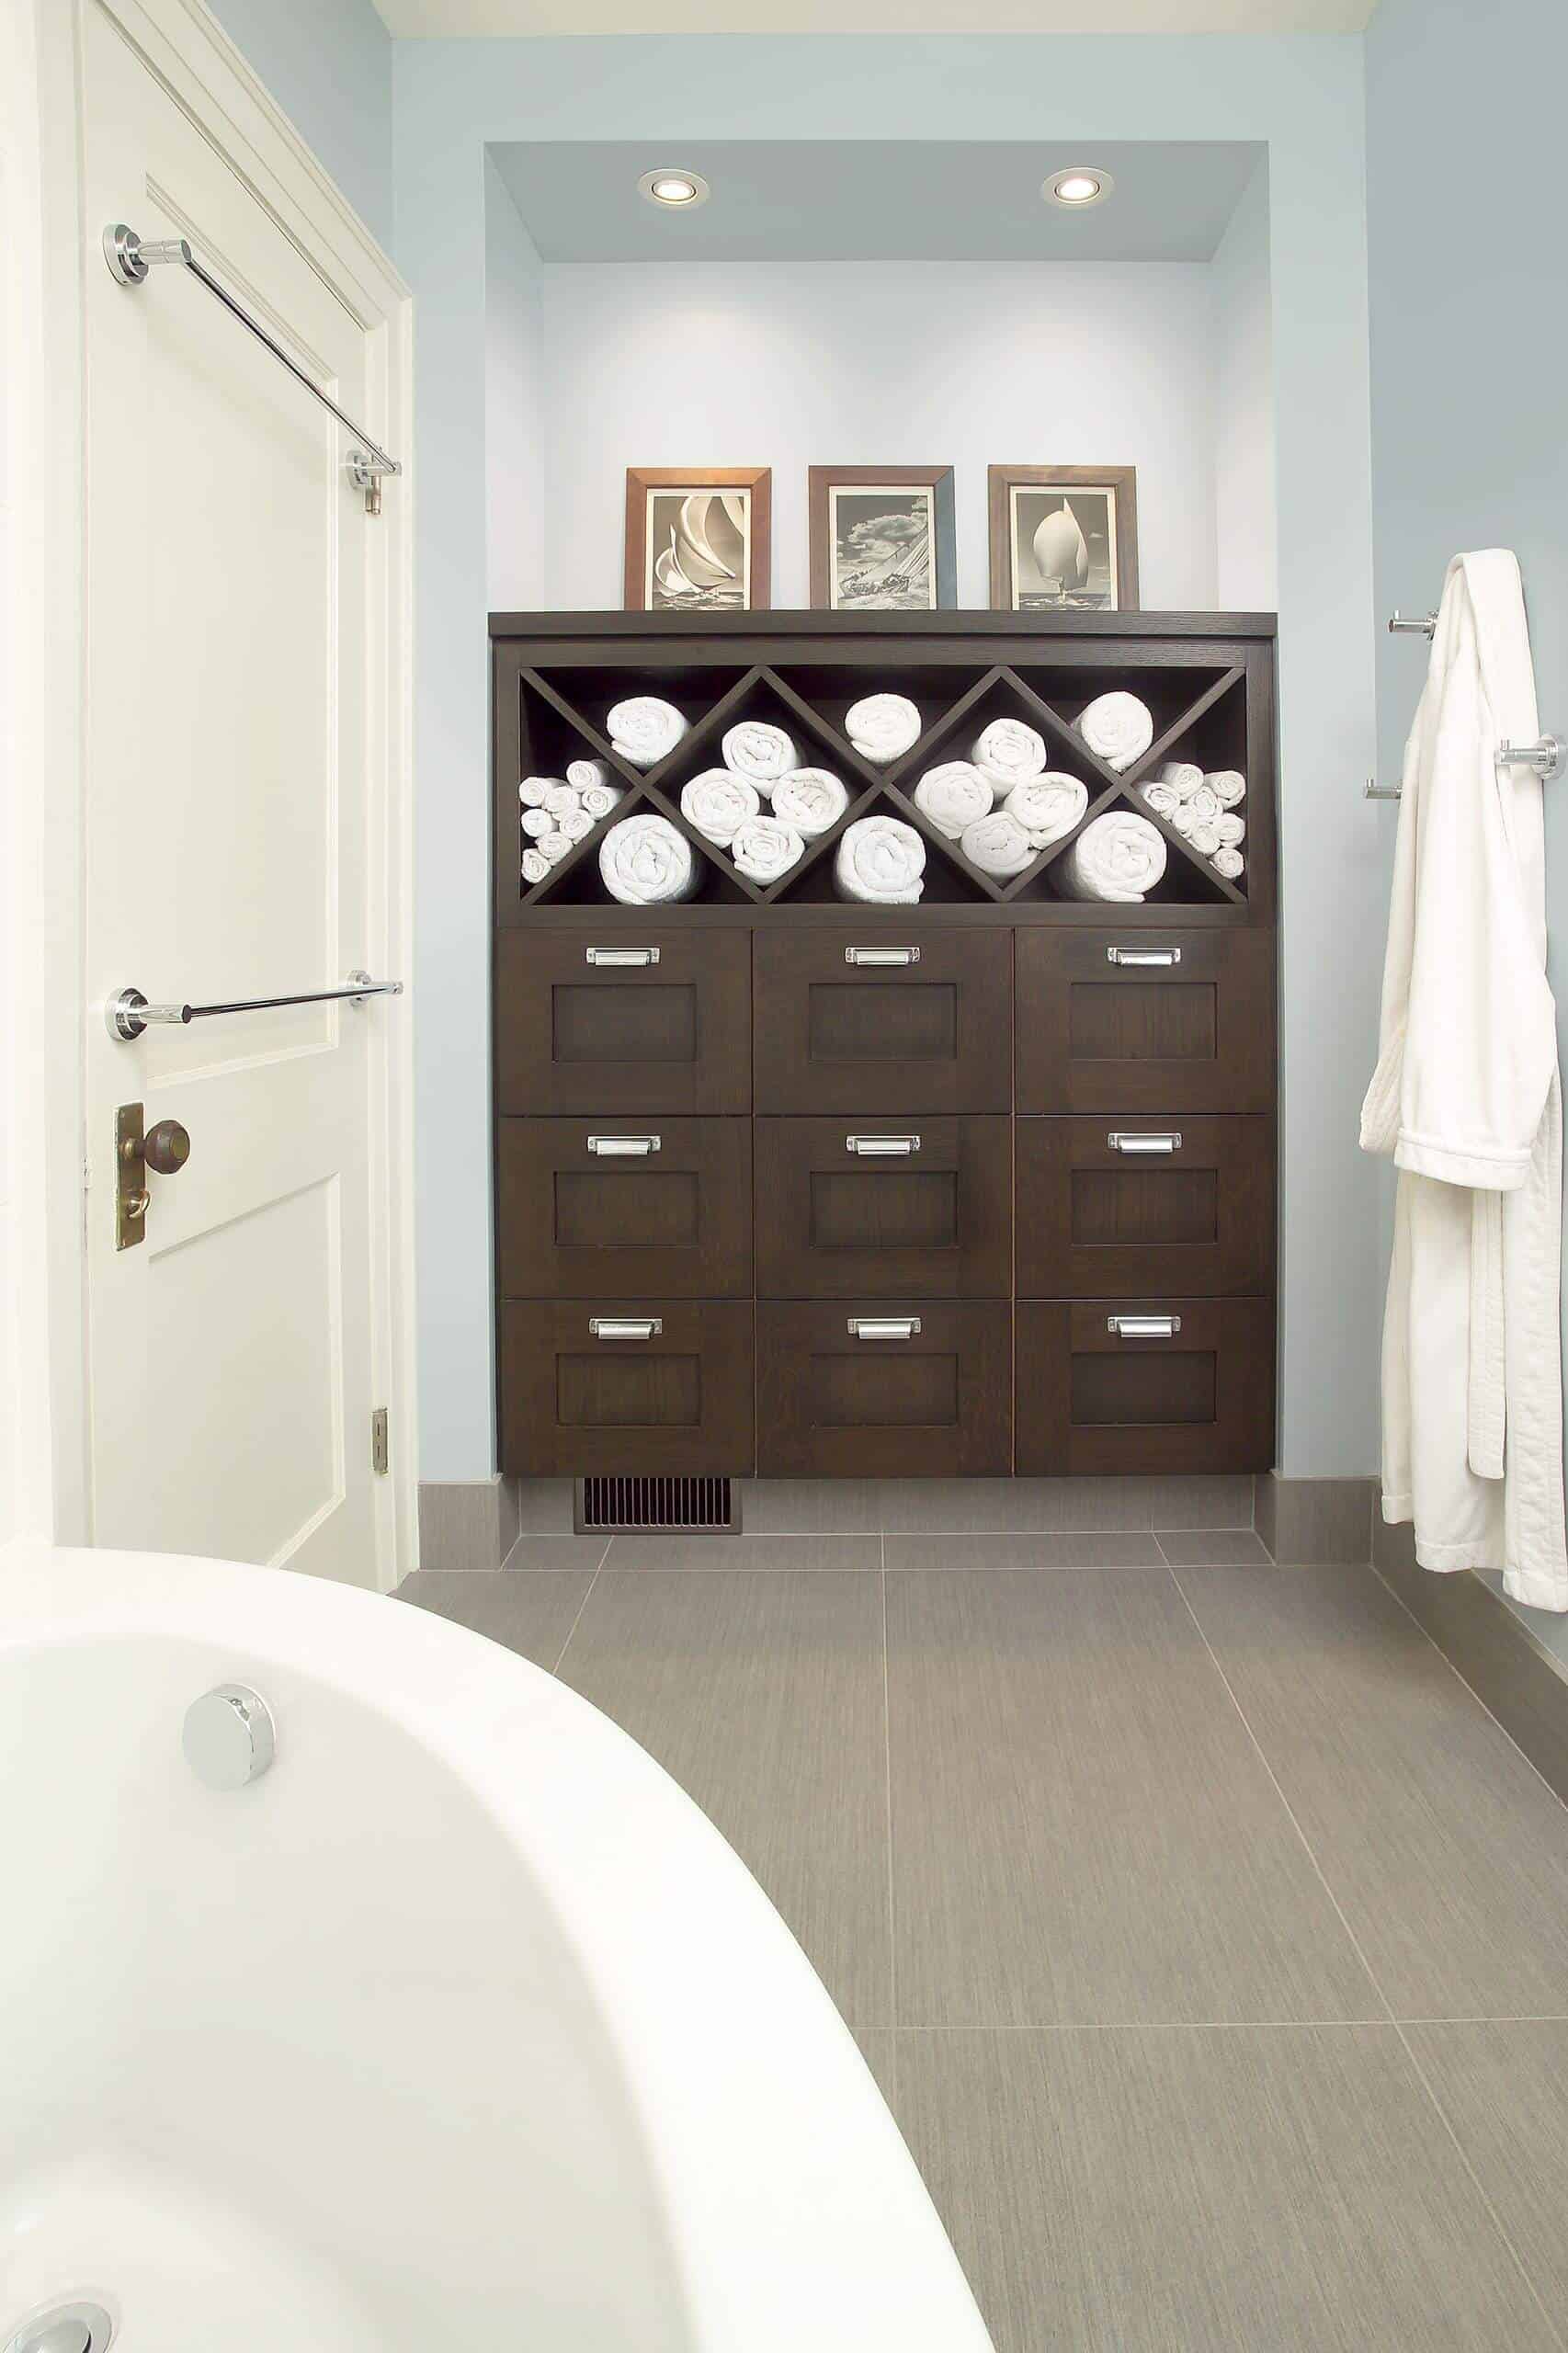 Towel Storage Ideas For Your Bathroom, Bathroom Shelves Ideas For Towels